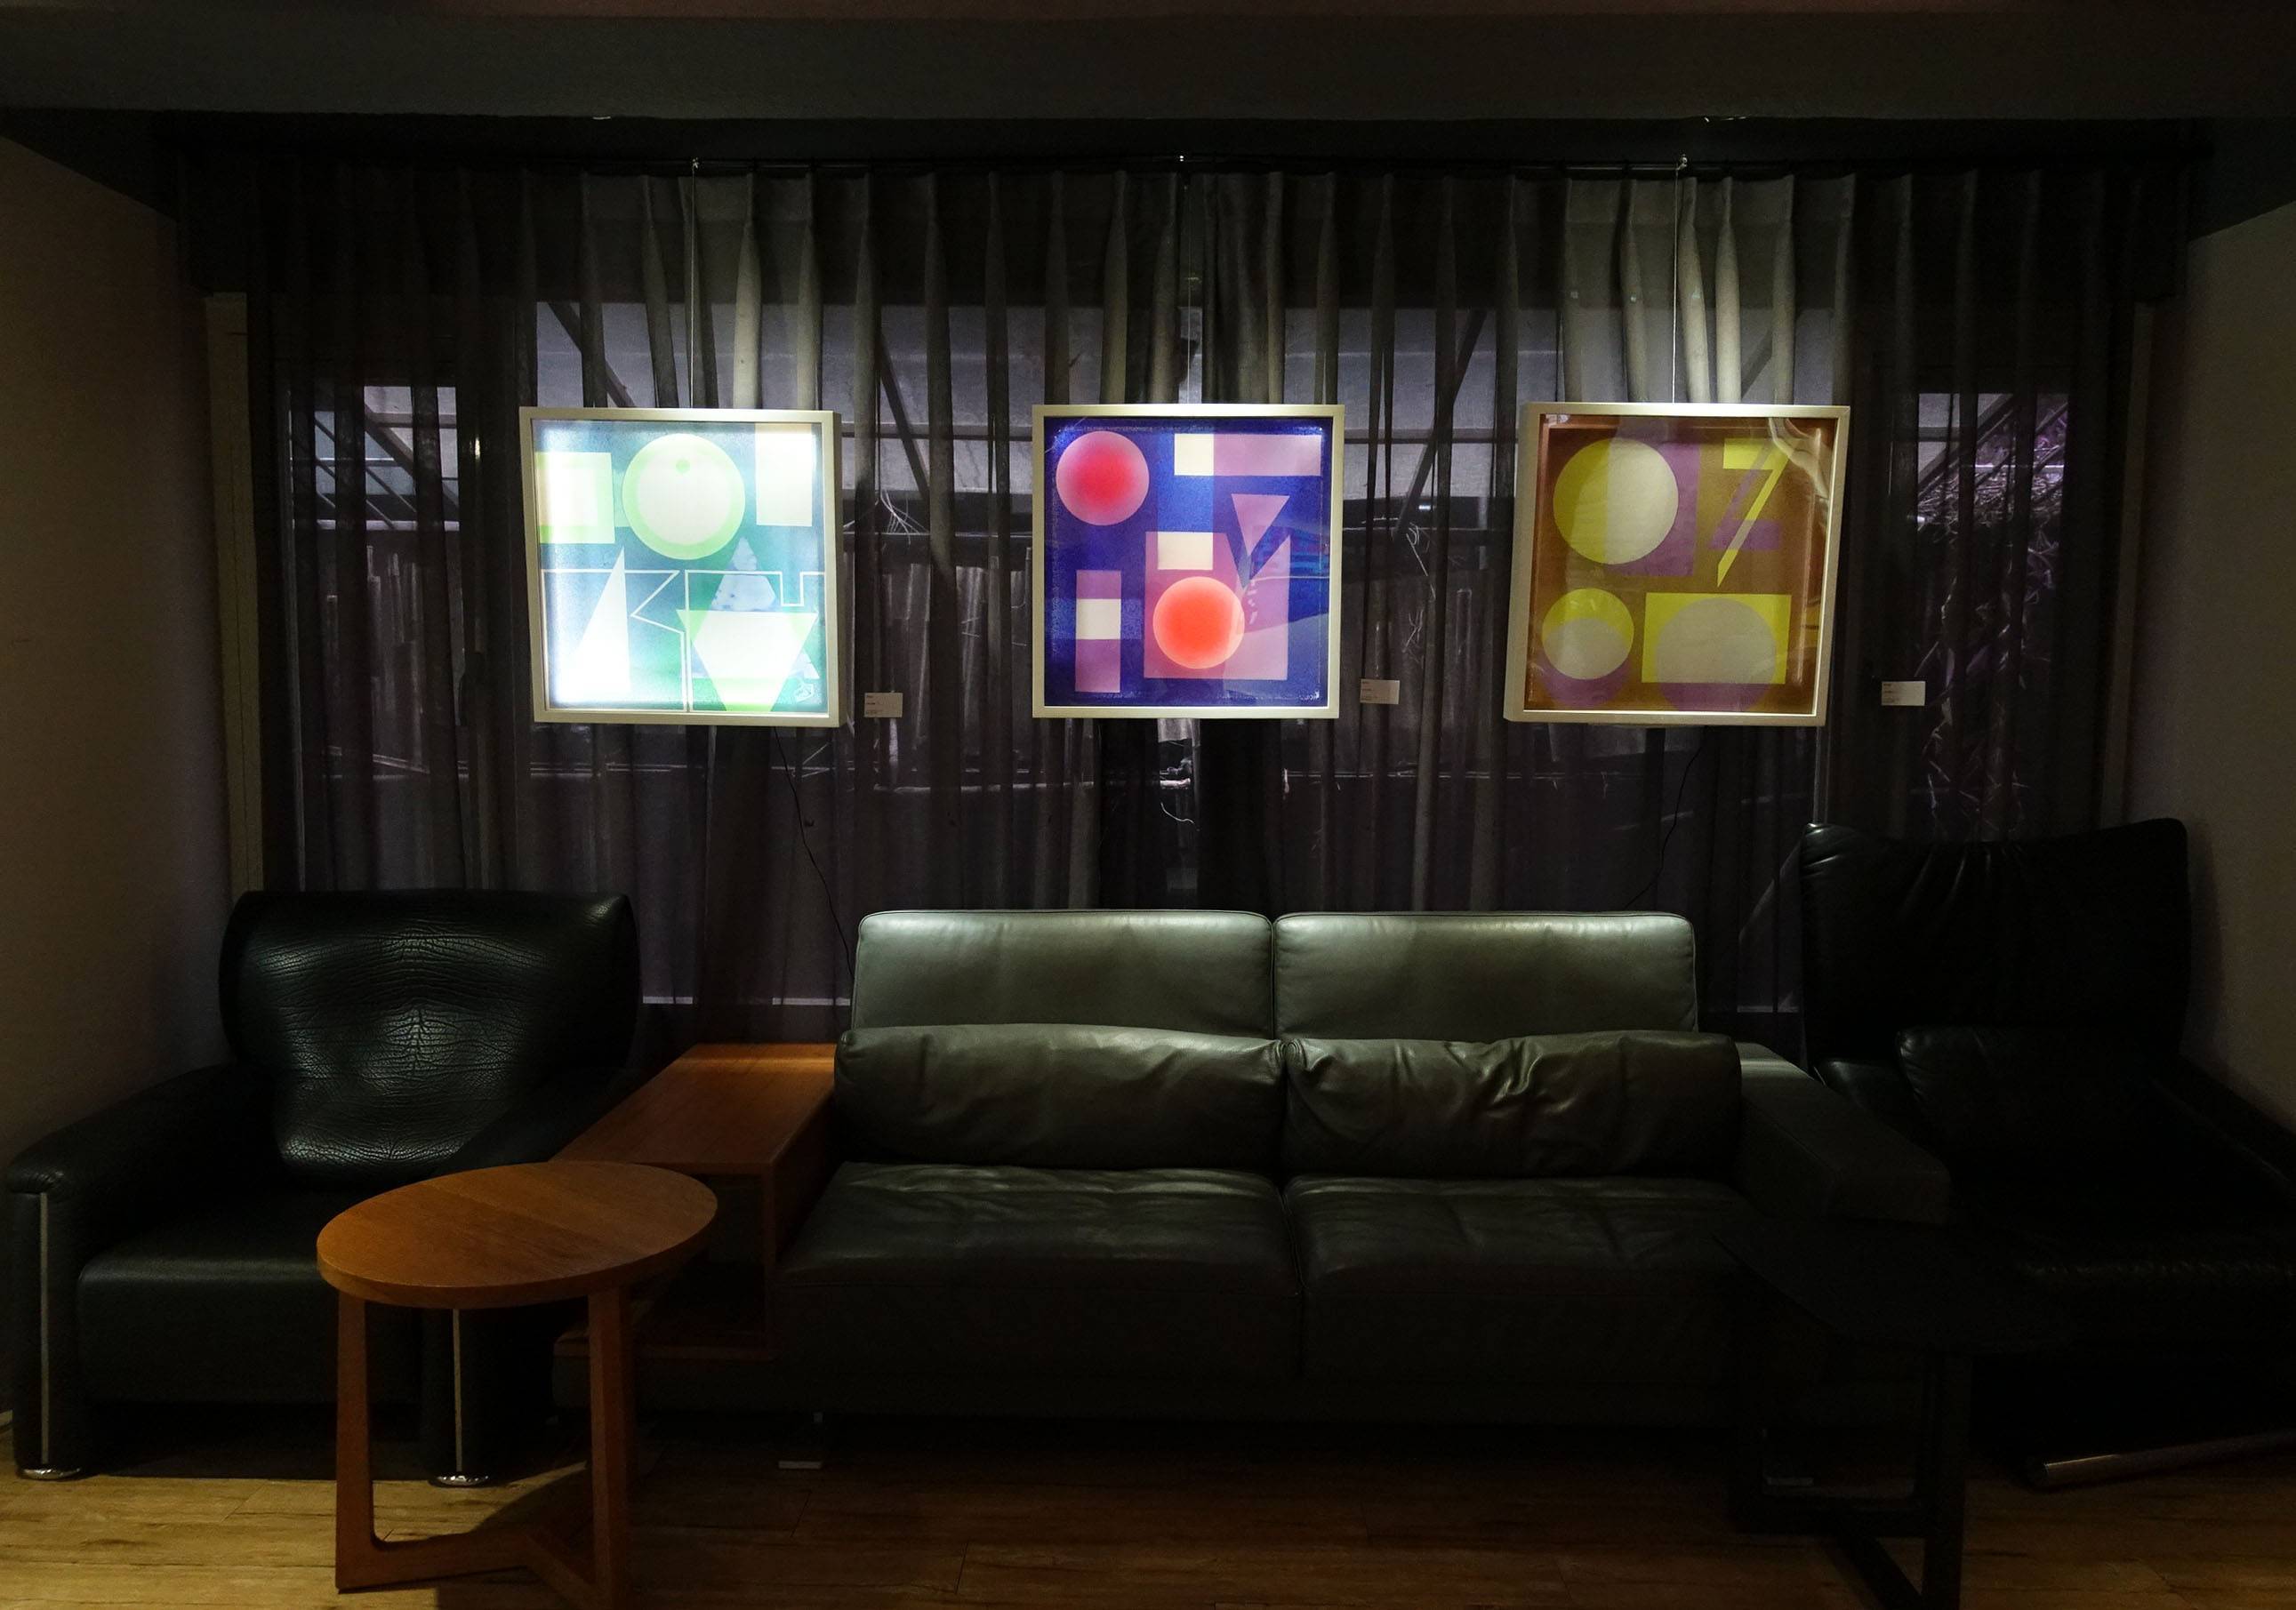 湯雅璇，《分解・構織》系列作品於In Live藝術空間現場展出。